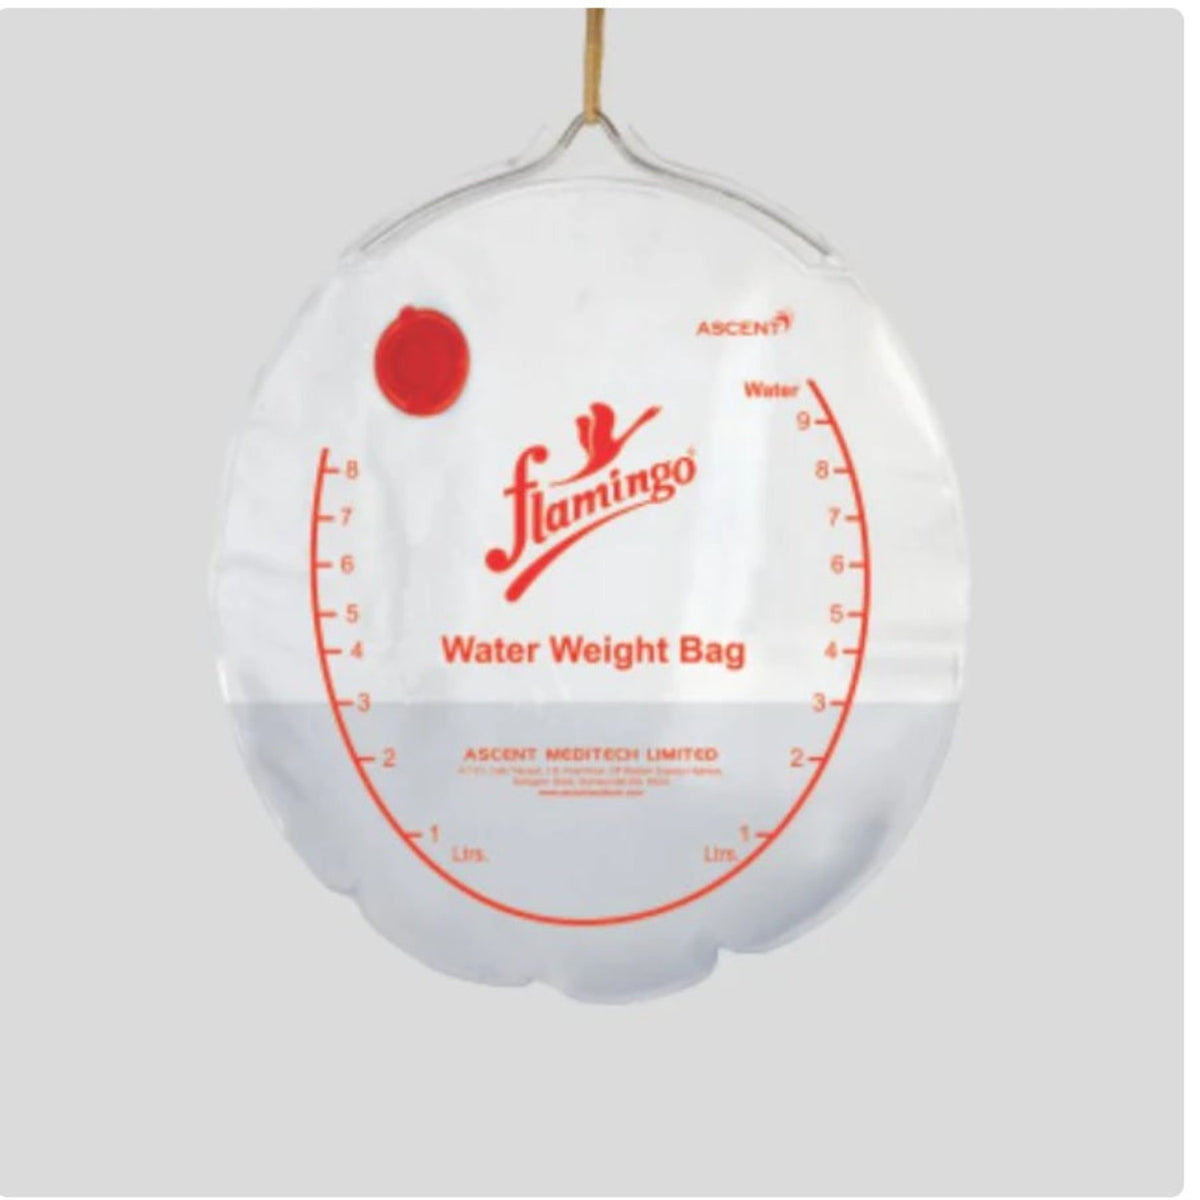 Flamingo Health Orthopaedic Water Weight Bag Universal Code 2120